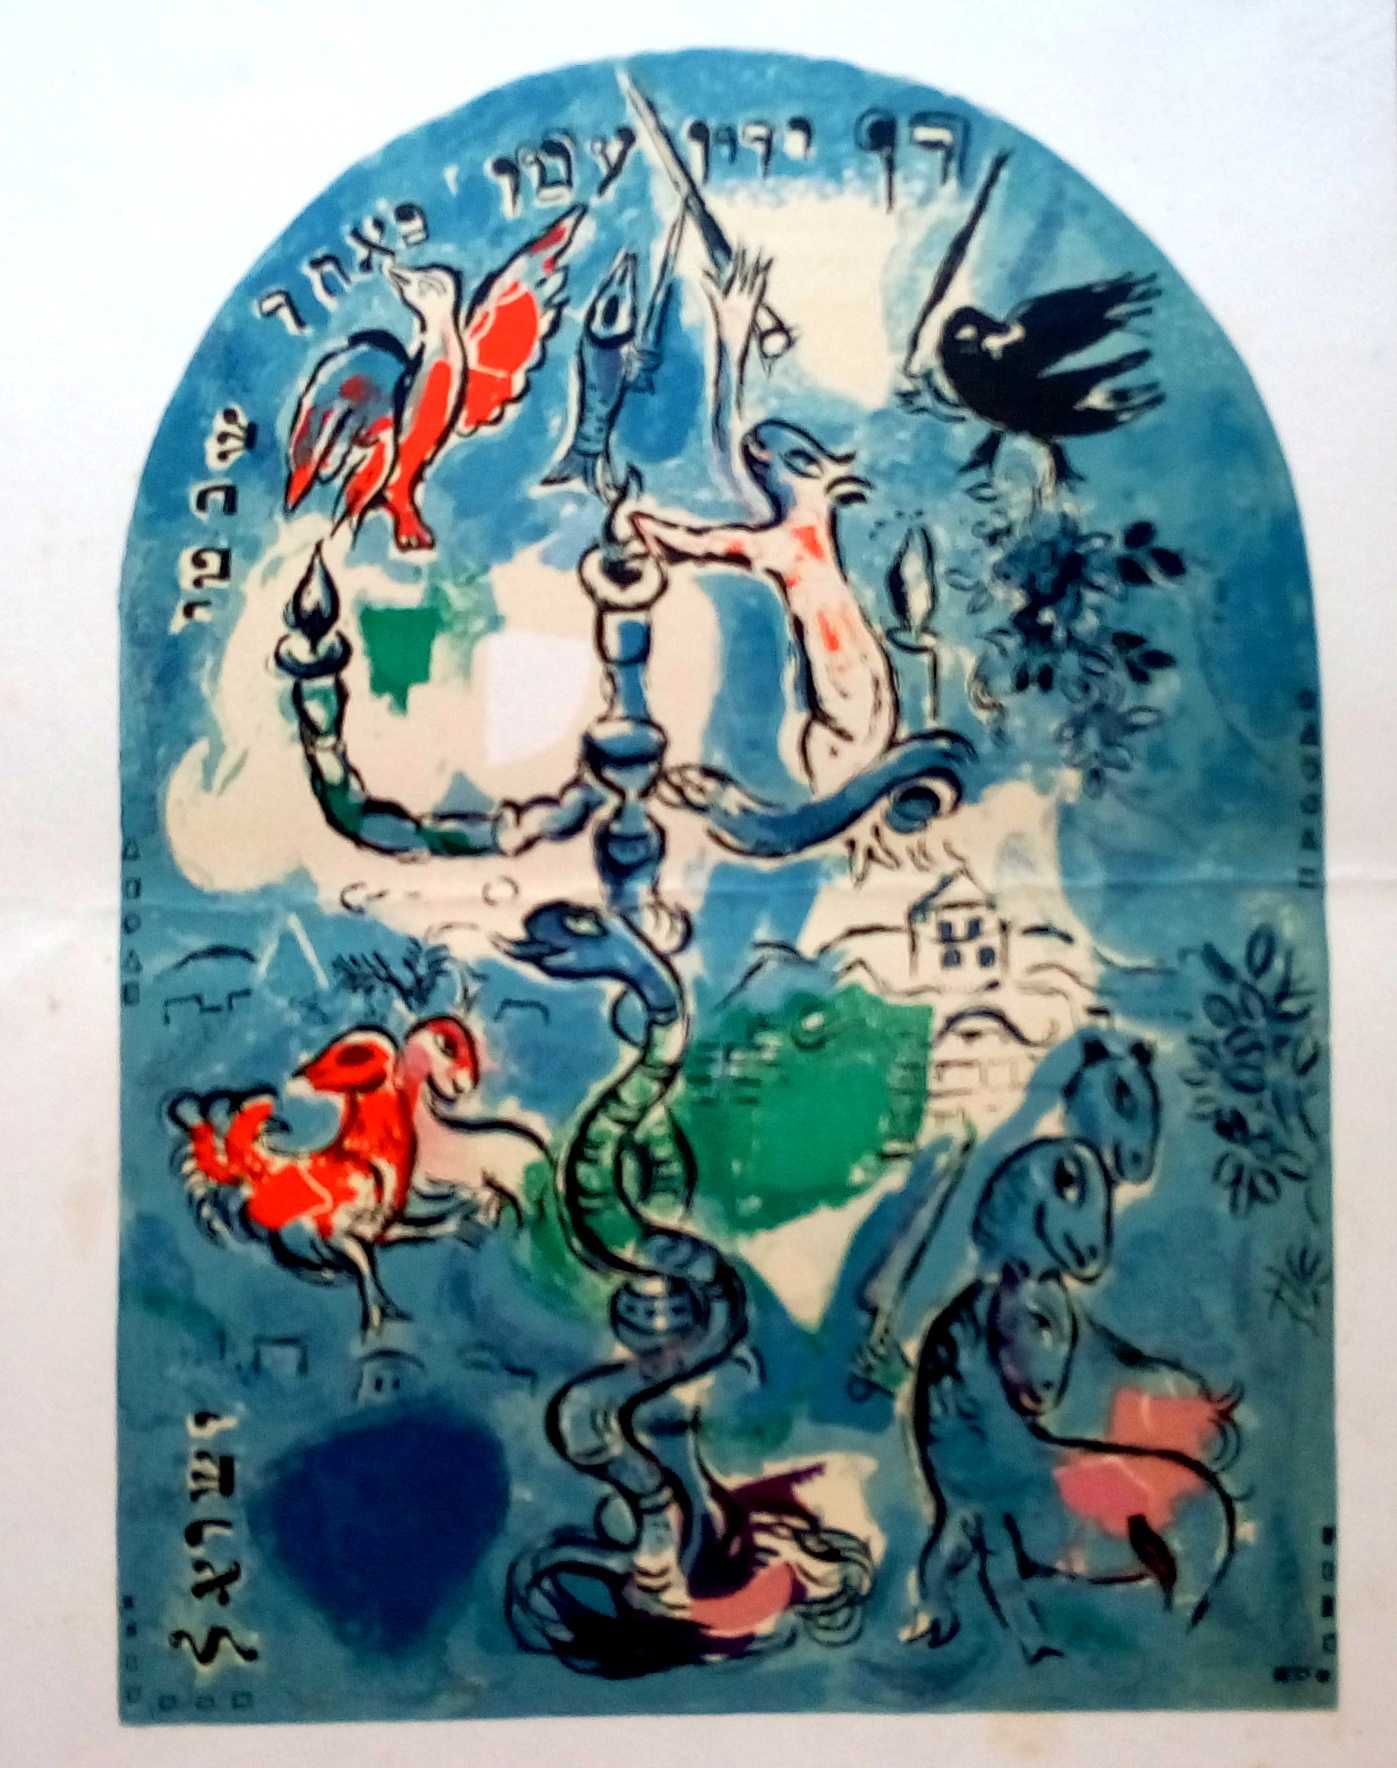 Litografie Marc Chagall